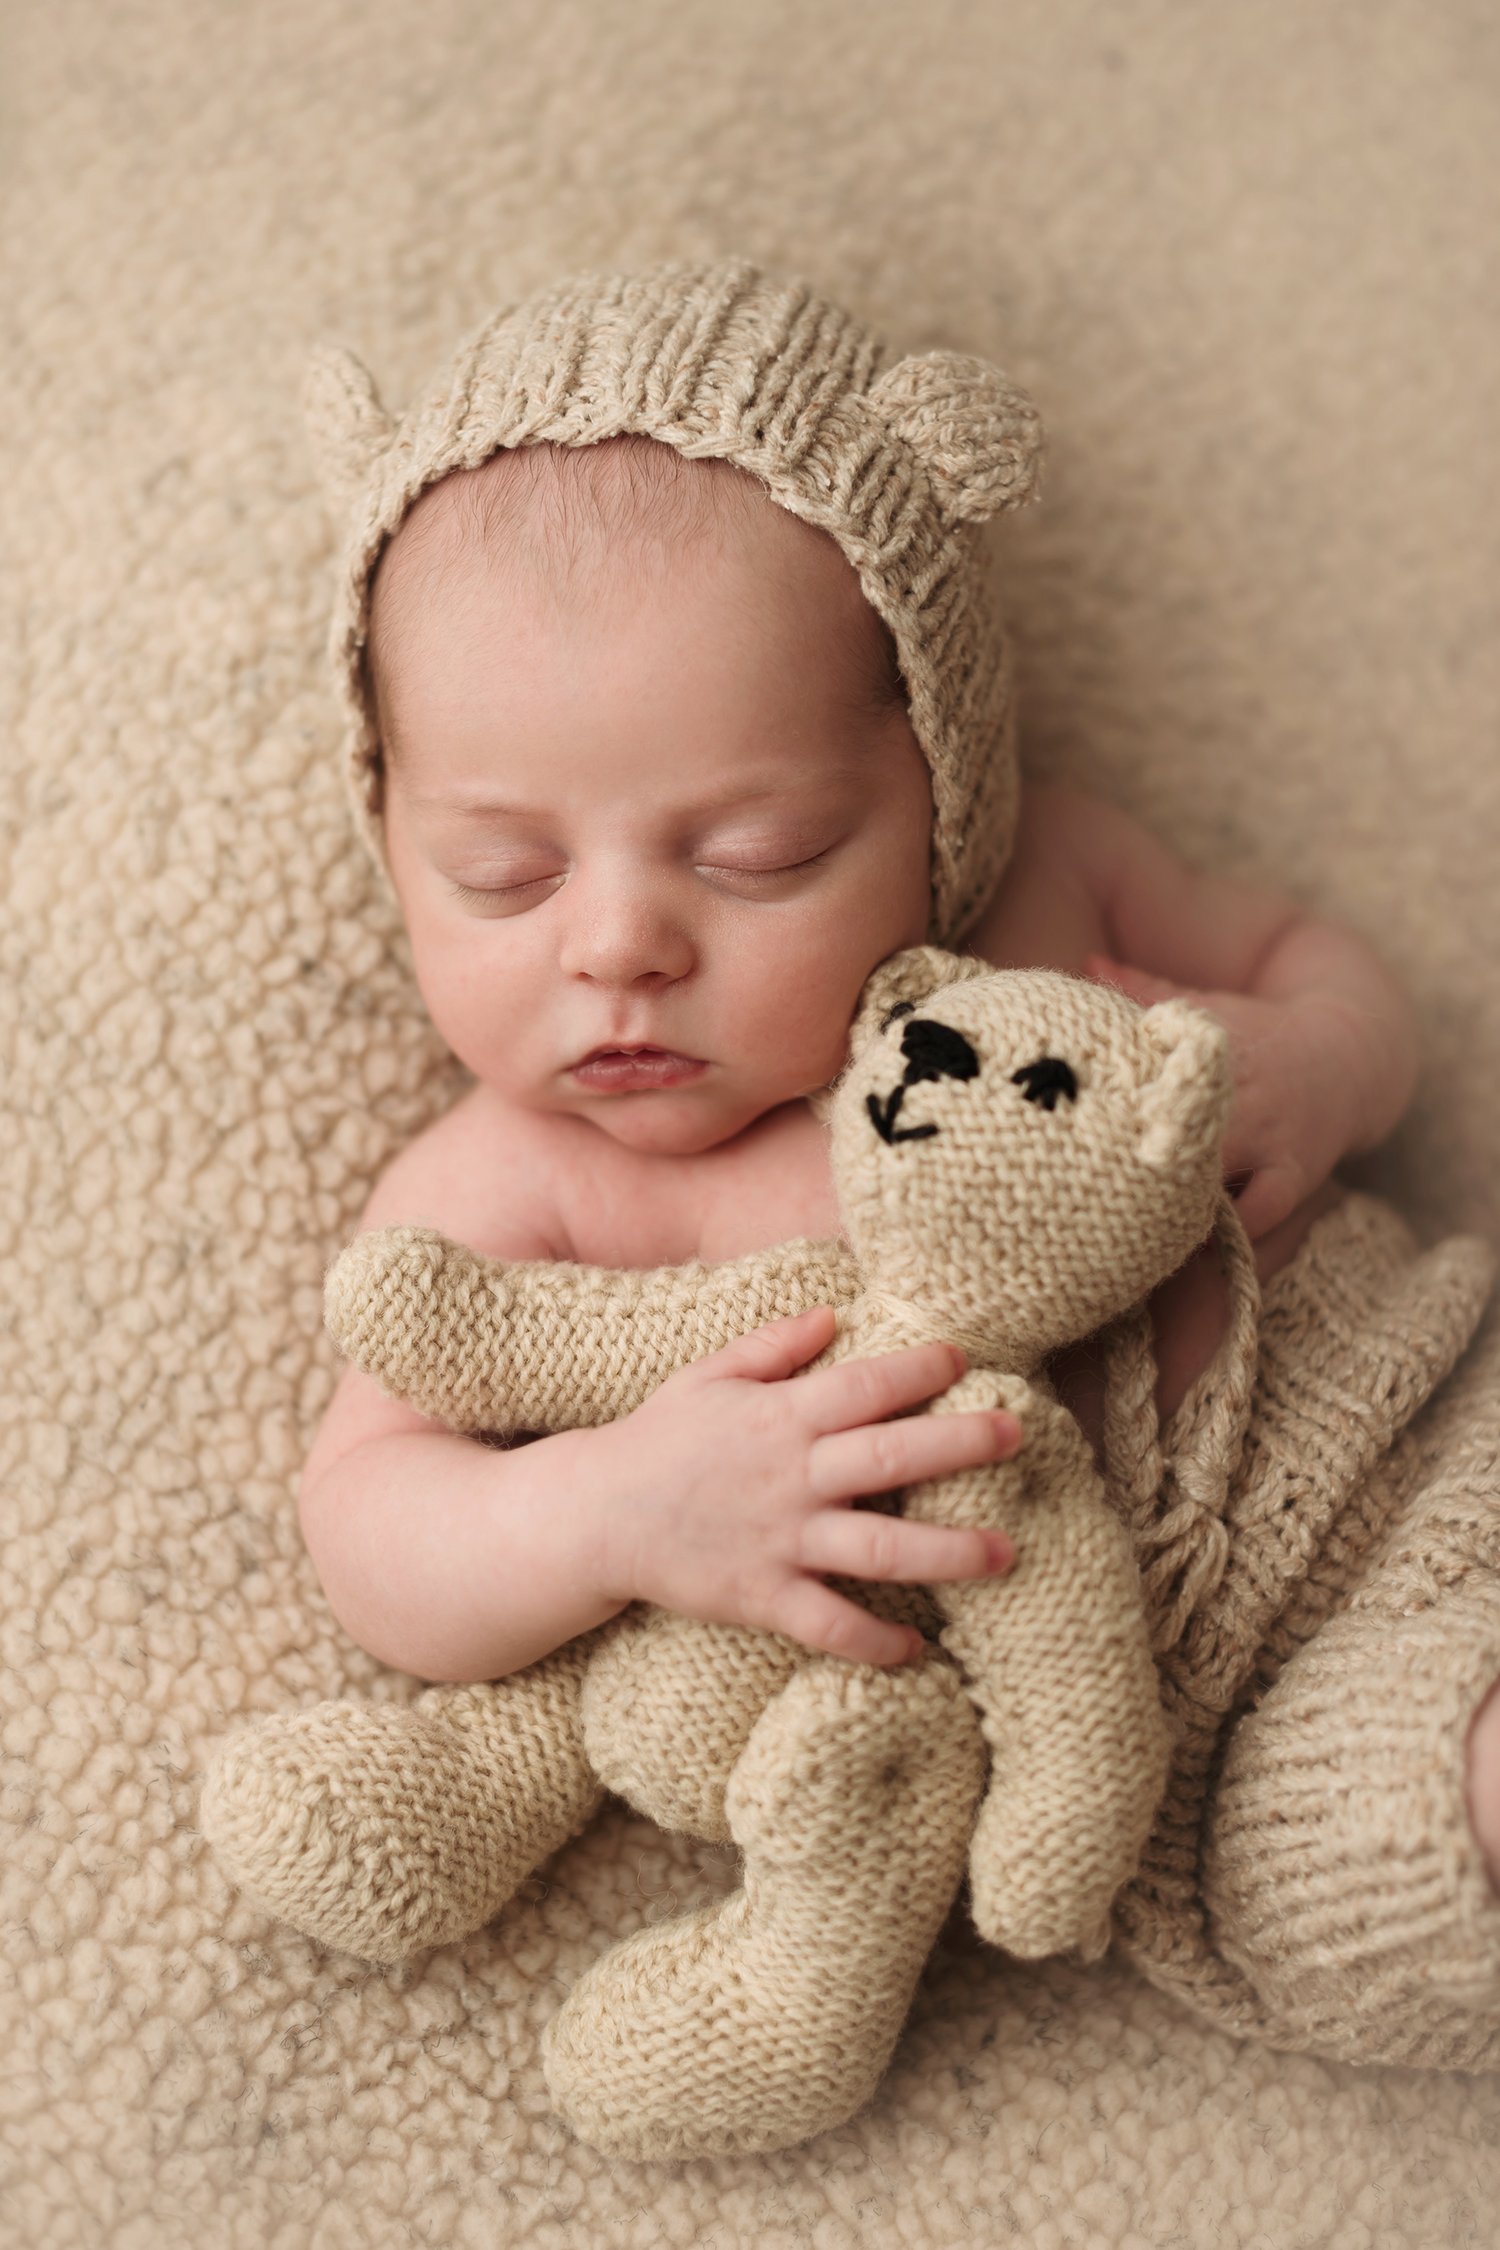 columbus-ohio-baby-photographer-adorable-newborn-teddybear-barebabyphotography.jpg